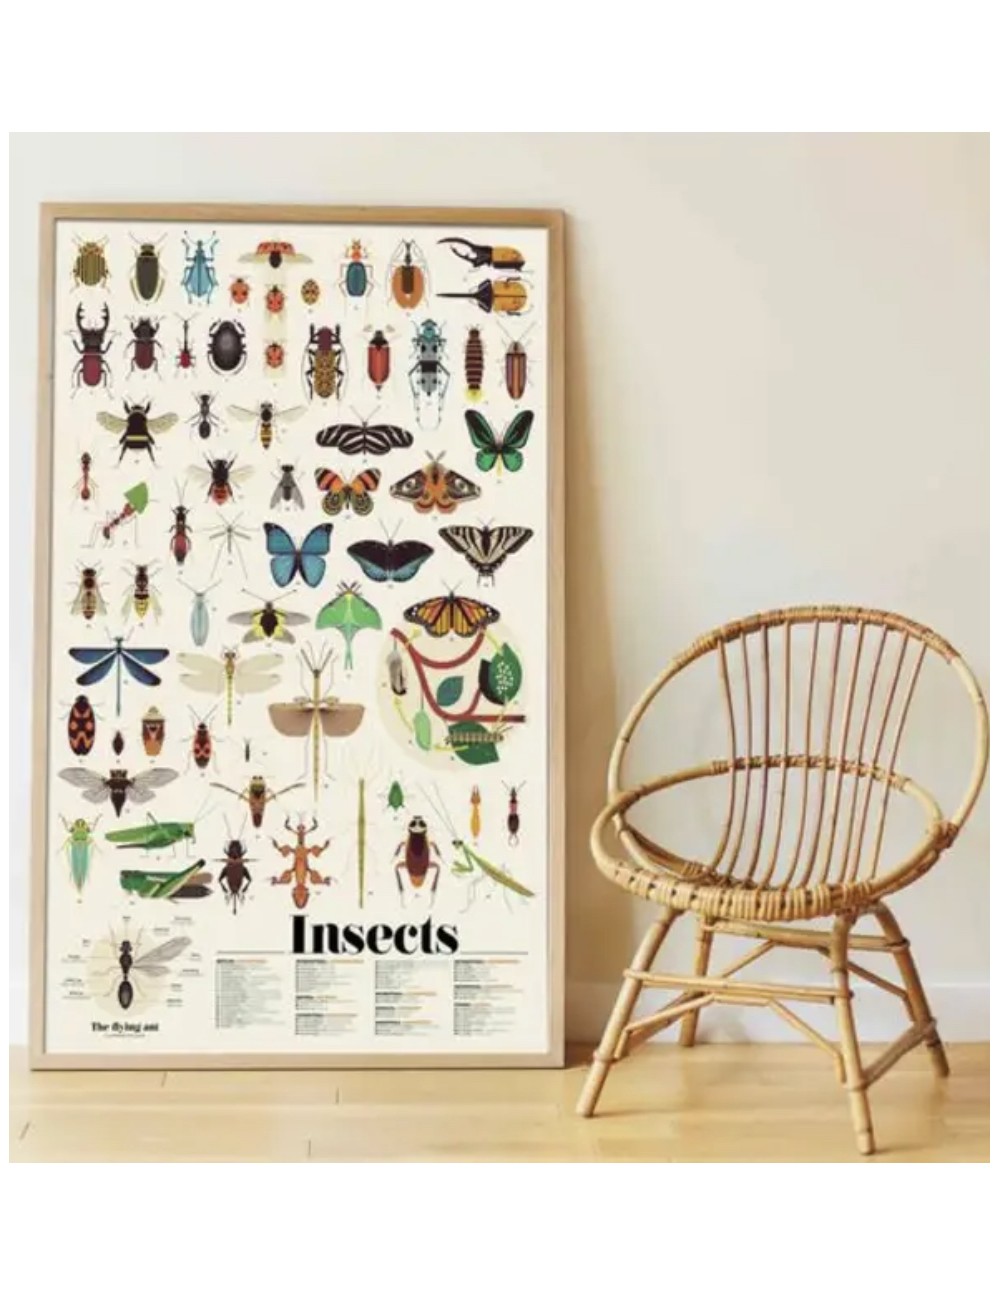 Poster en stickers insectes - Poppik